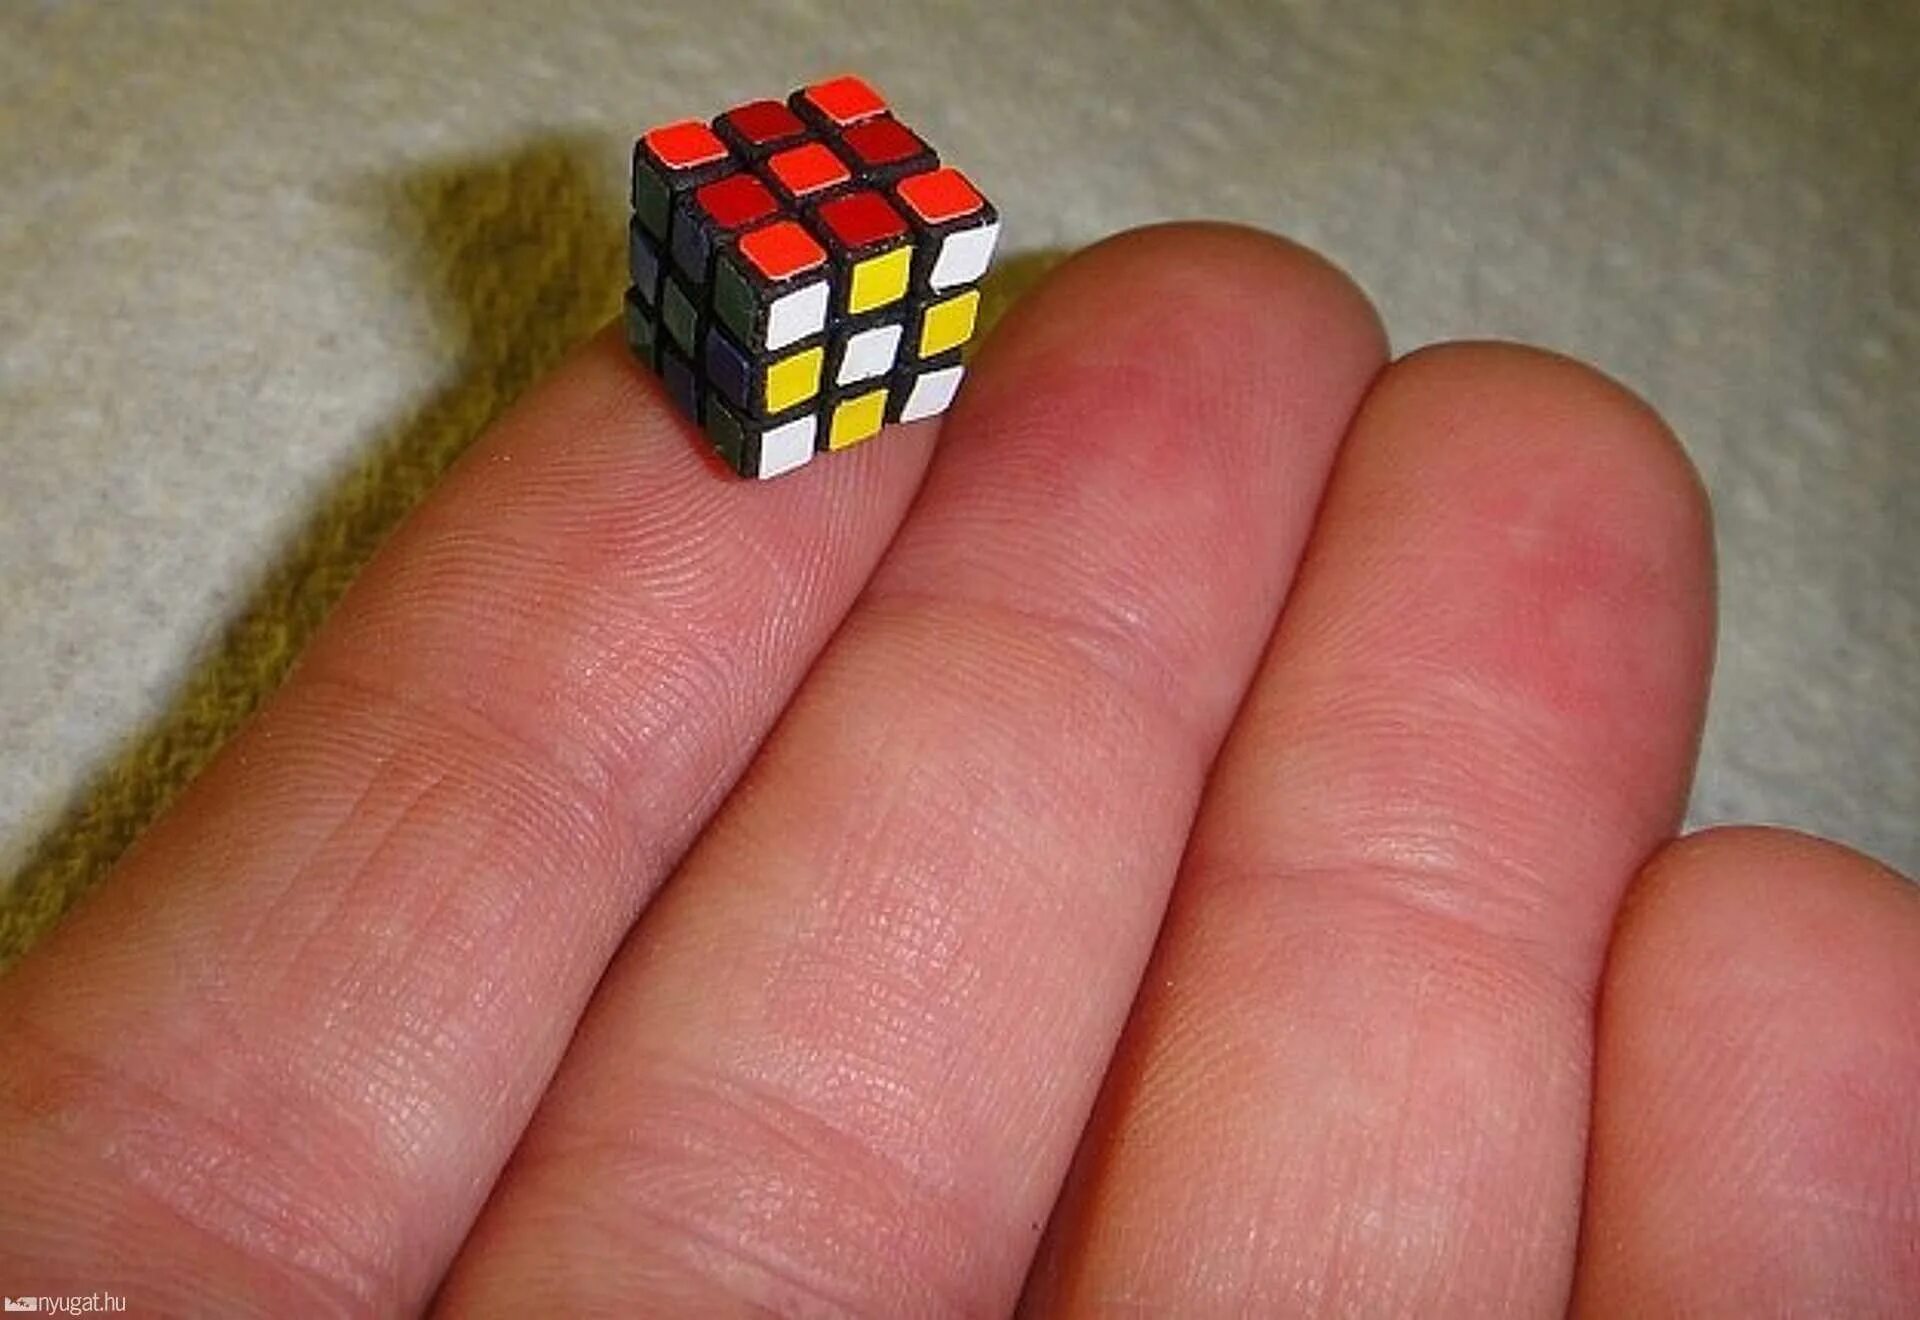 Игры кубик маленькие. Кубик рубик 3 на 3 маленький. Самый маленький кубик Рубика 3х3. Кубик Рубика 3на3 мини 1см. Самый маленький кубик Рубика в мире.